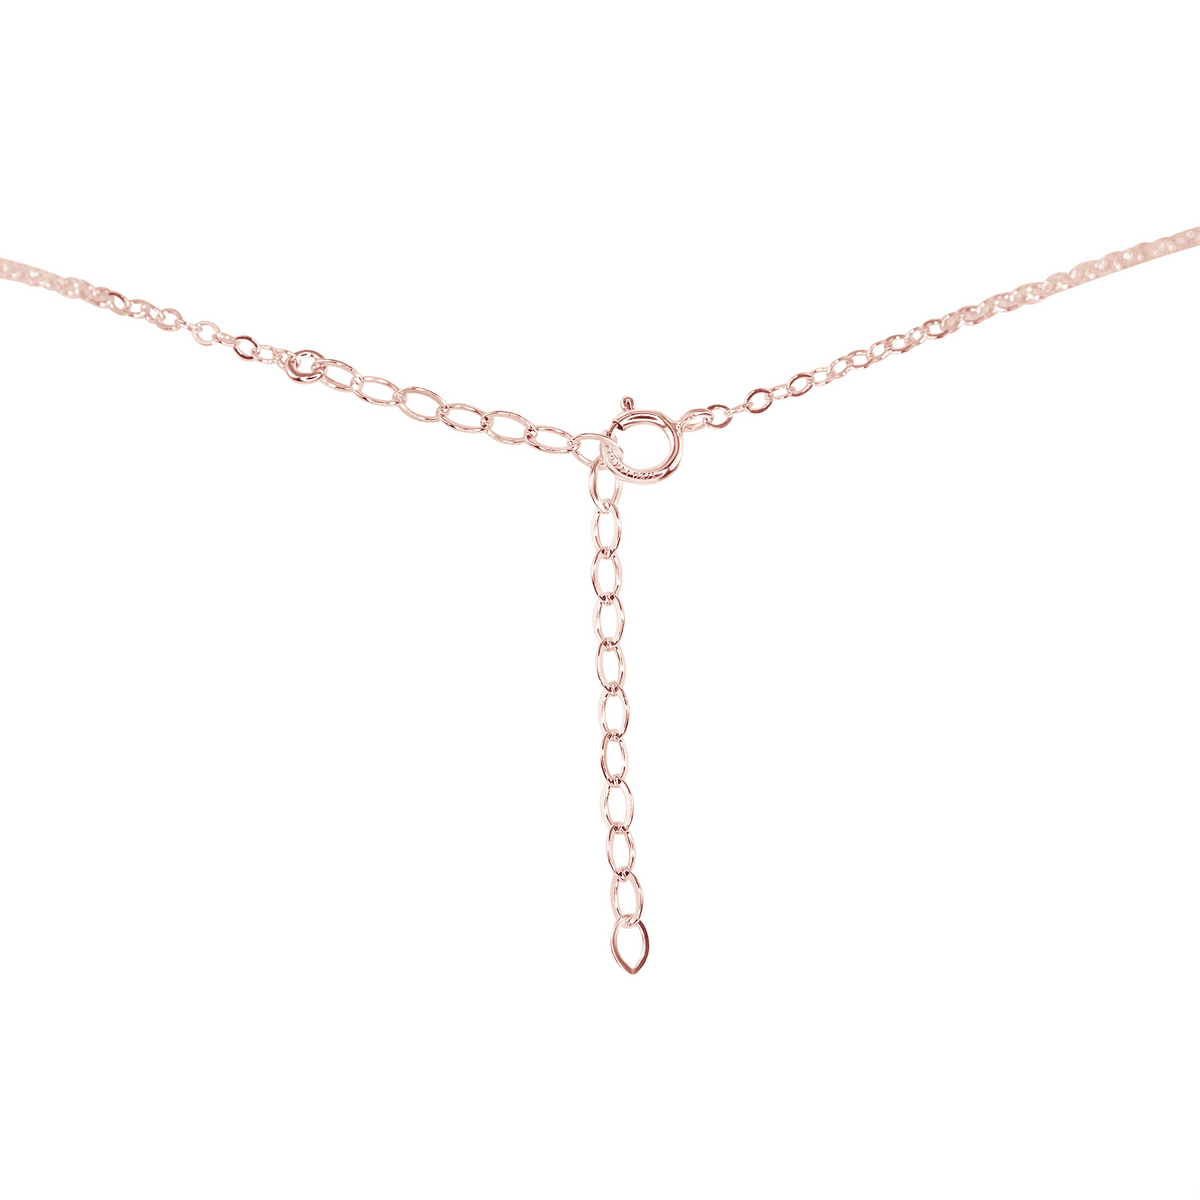 Carnelian Beaded Chain Choker Necklace - Carnelian Beaded Chain Choker Necklace - Sterling Silver - Luna Tide Handmade Crystal Jewellery